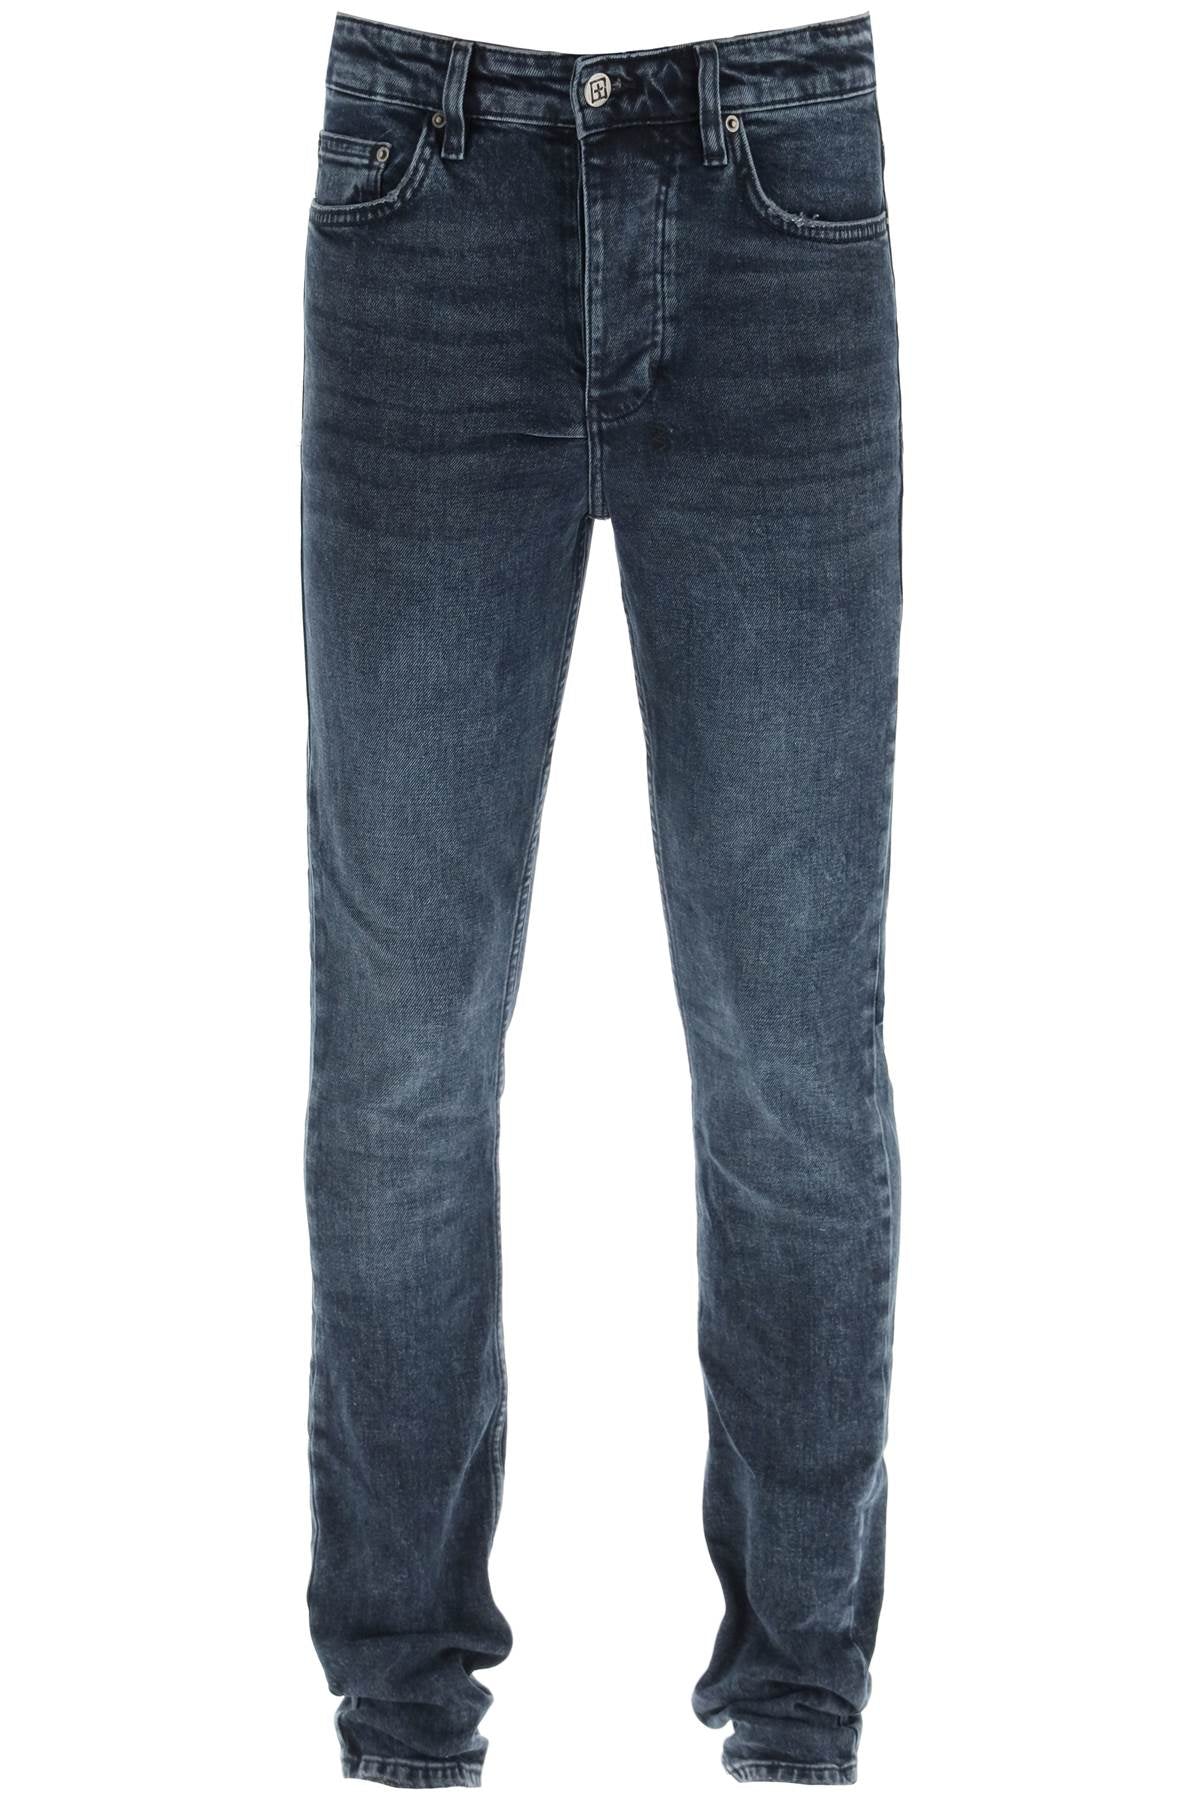 Redbat Men's Dark Wash Super Skinny Jeans 